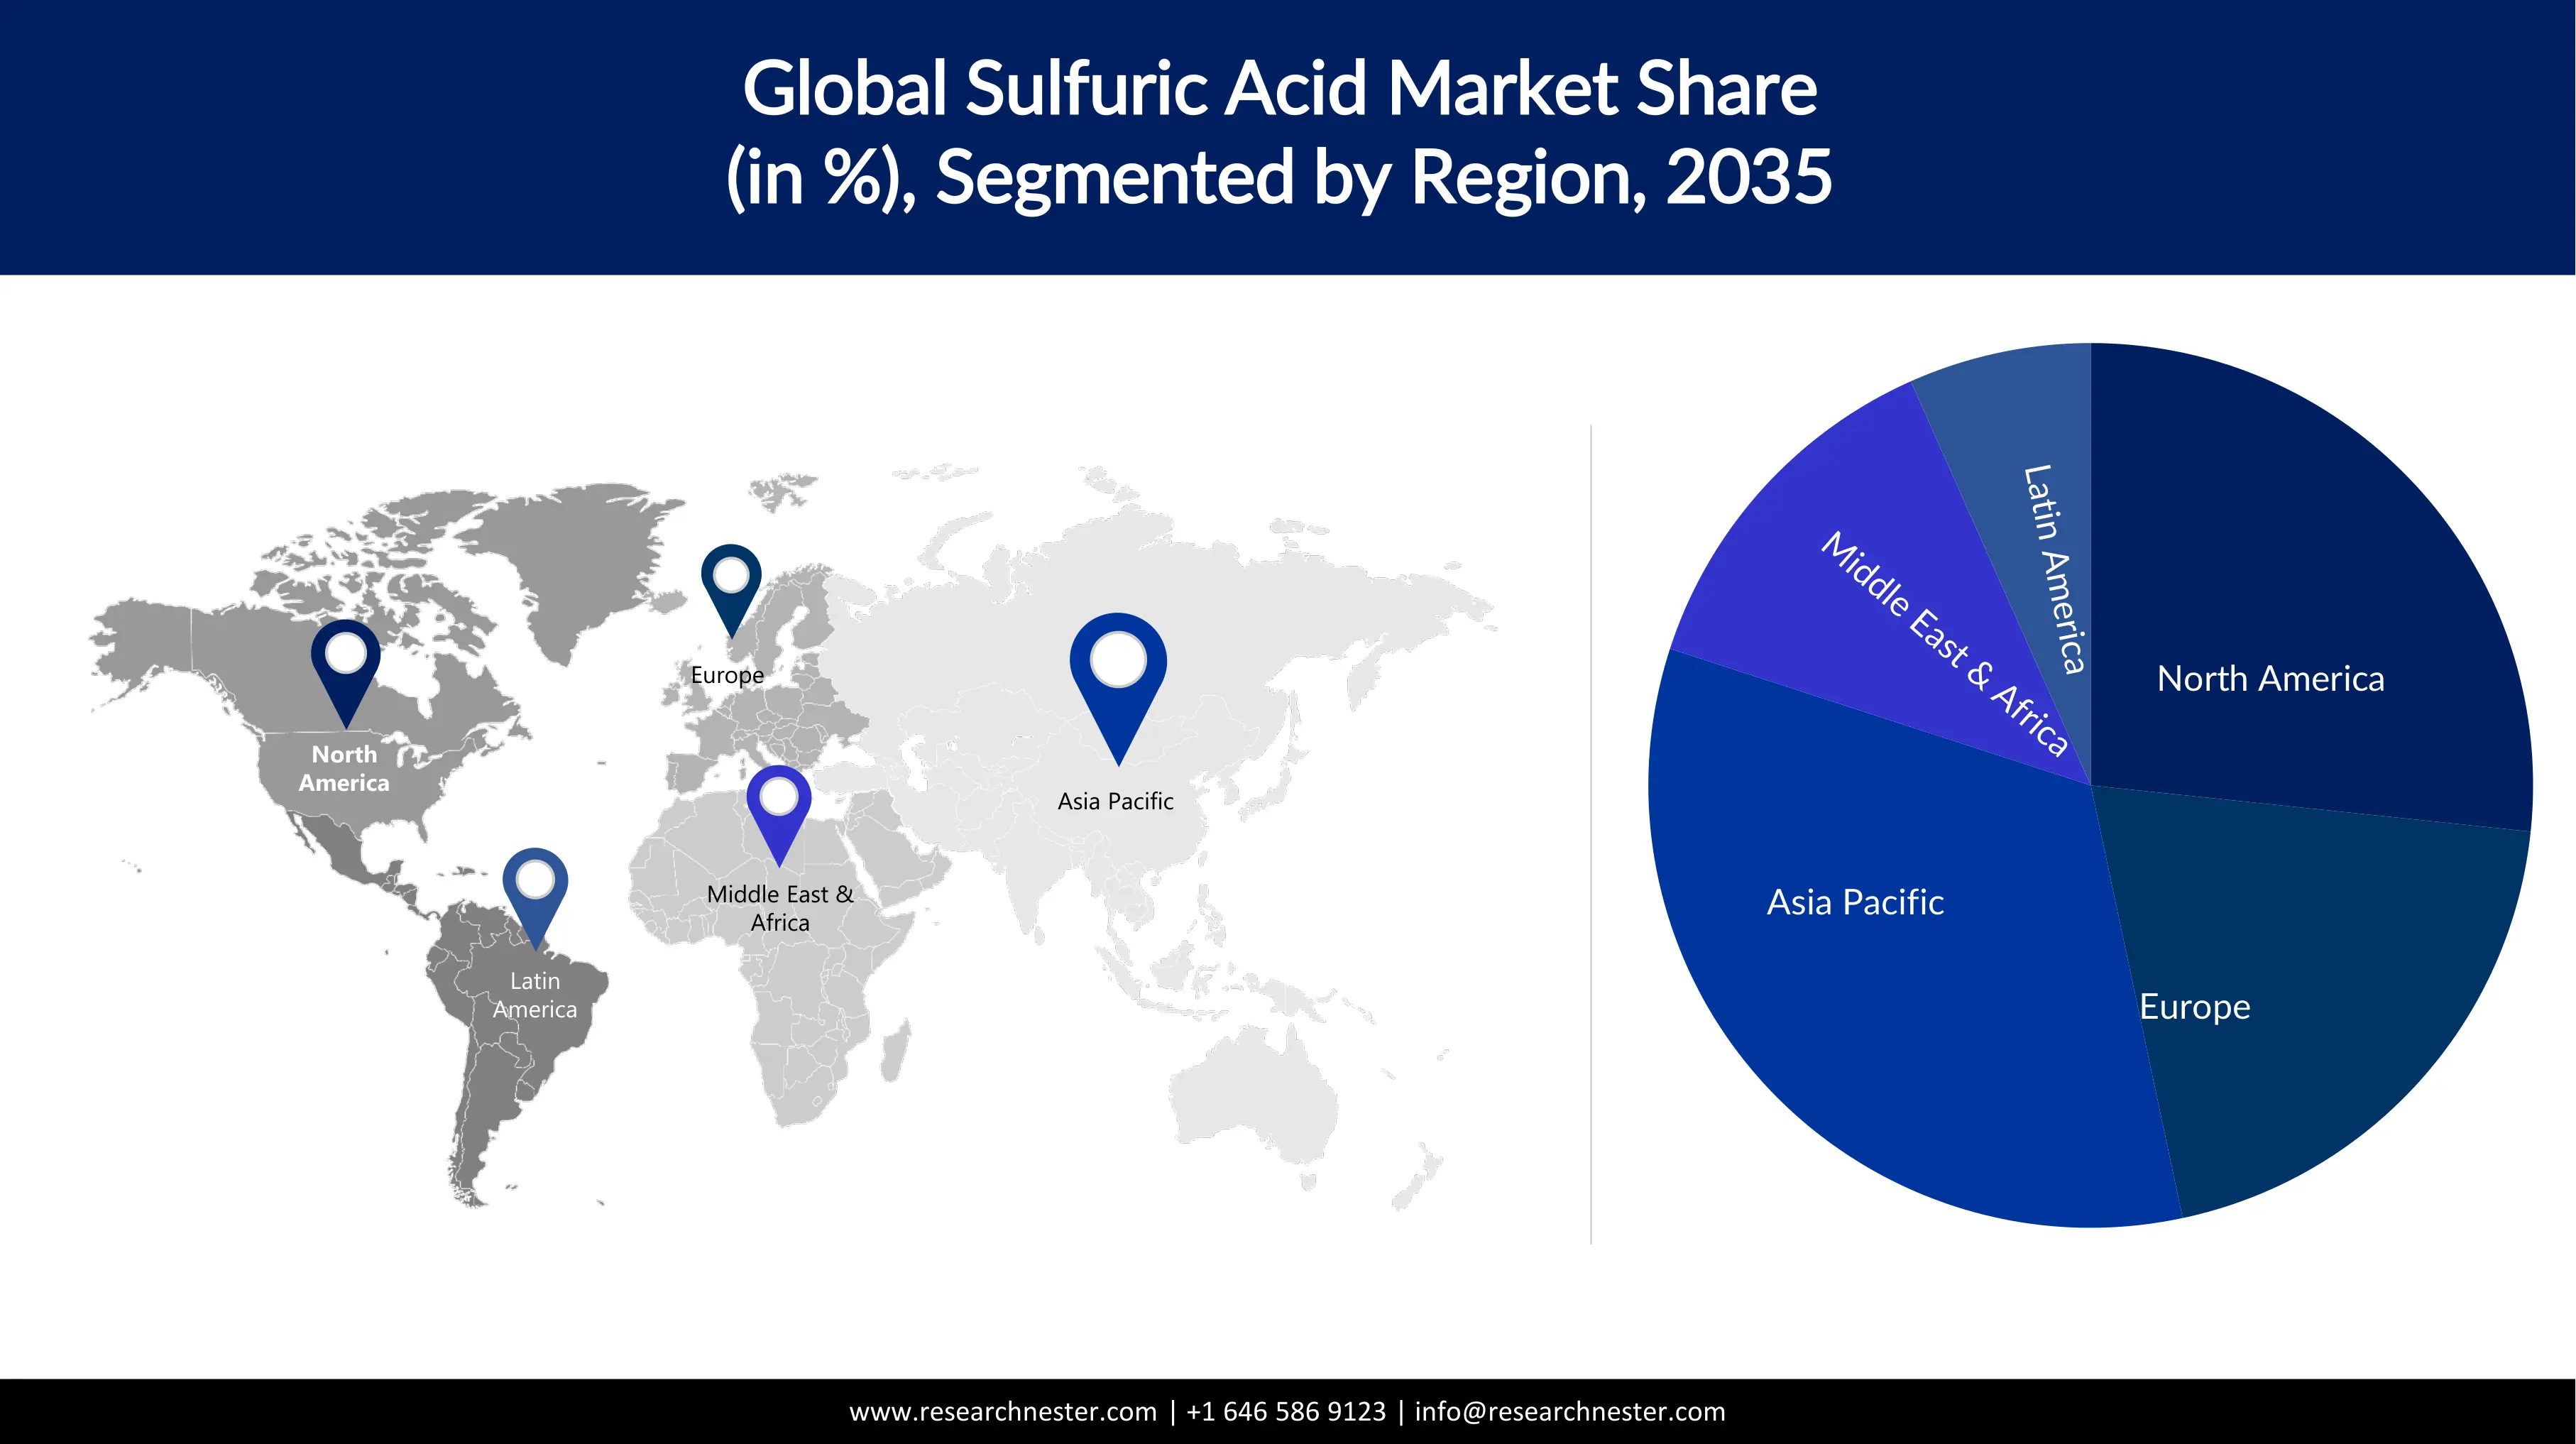 Sulfuric Acid Market Size